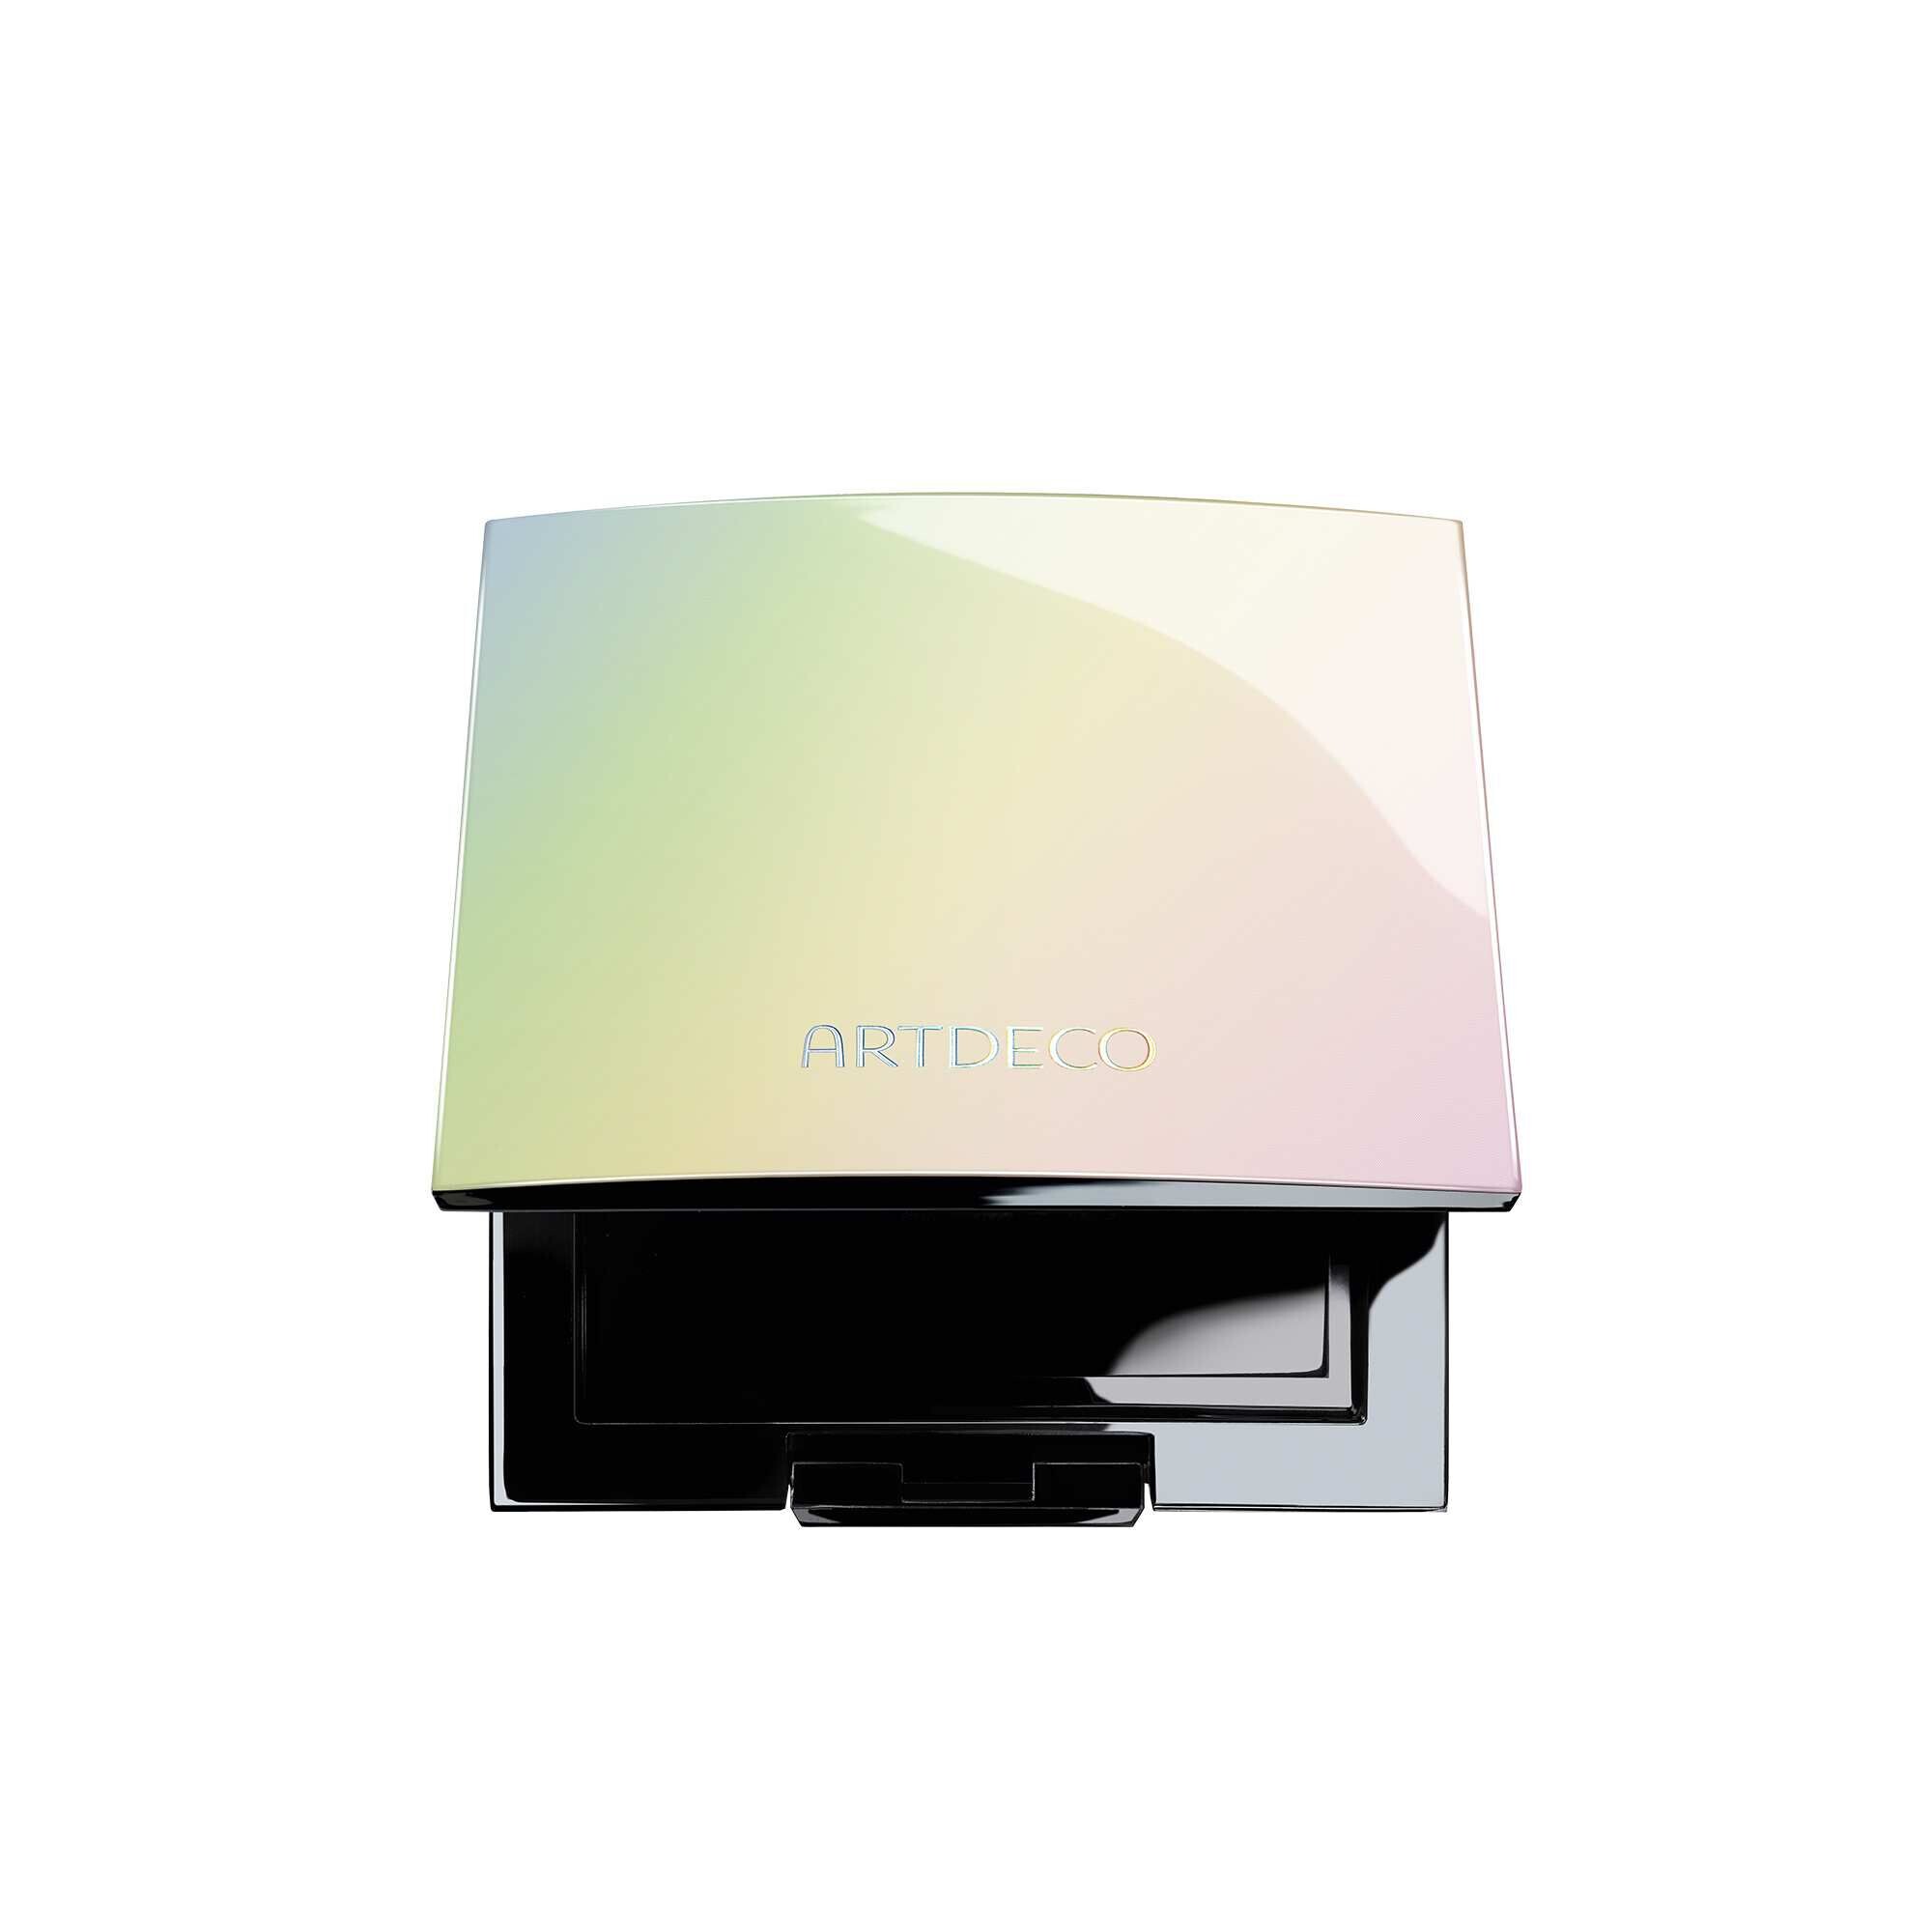 Artdeco Beauty Box Trio - Limited Edition